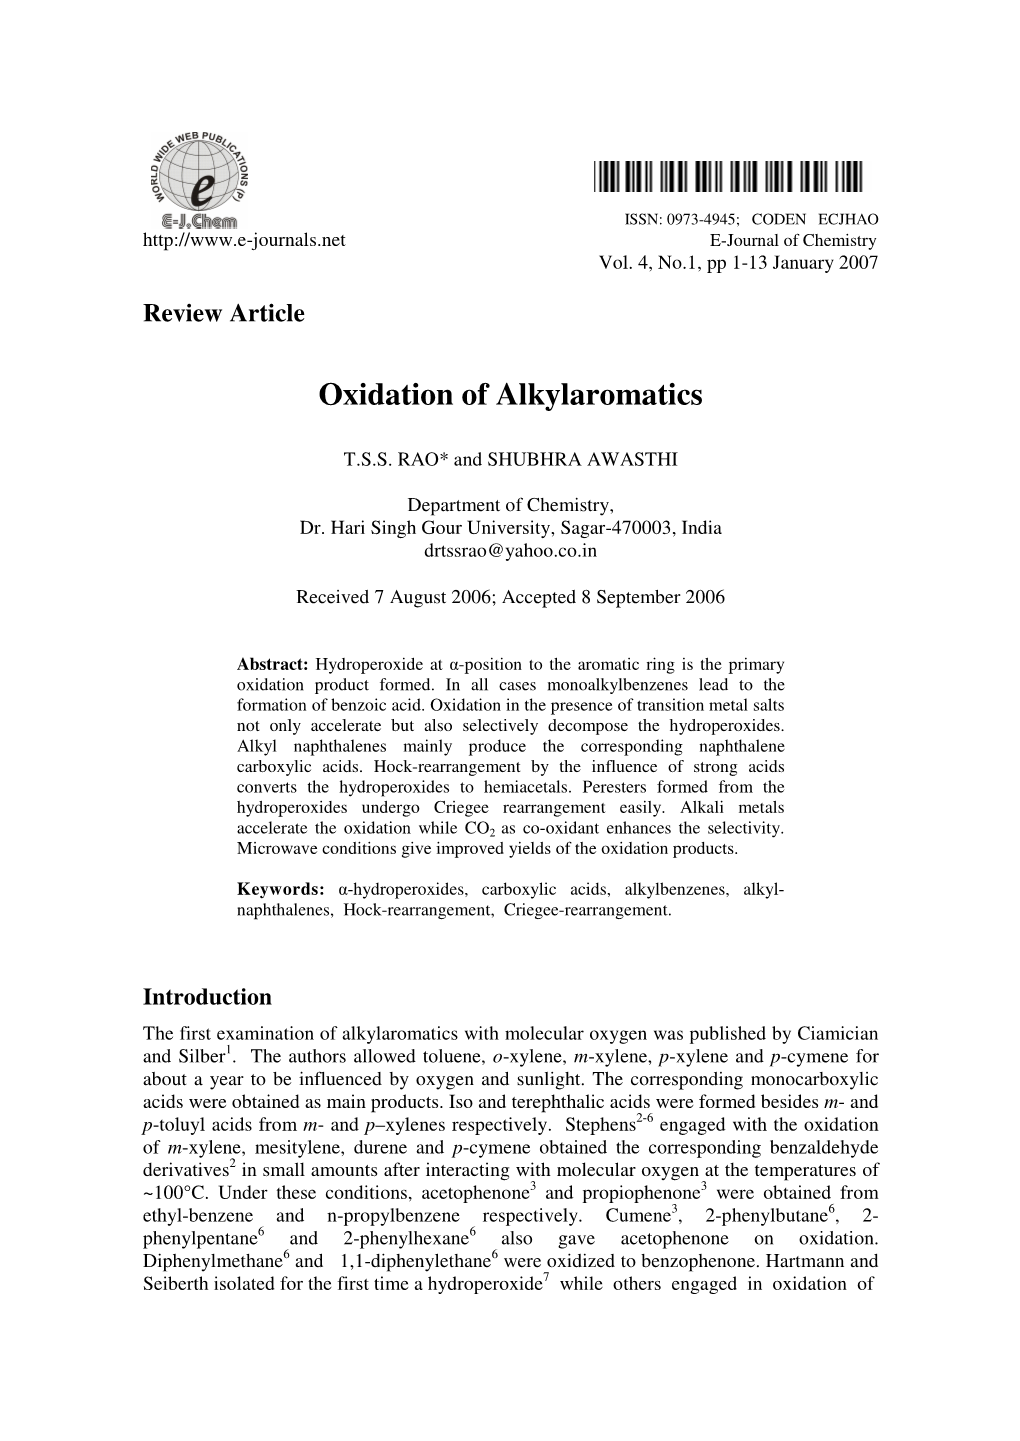 Oxidation of Alkylaromatics